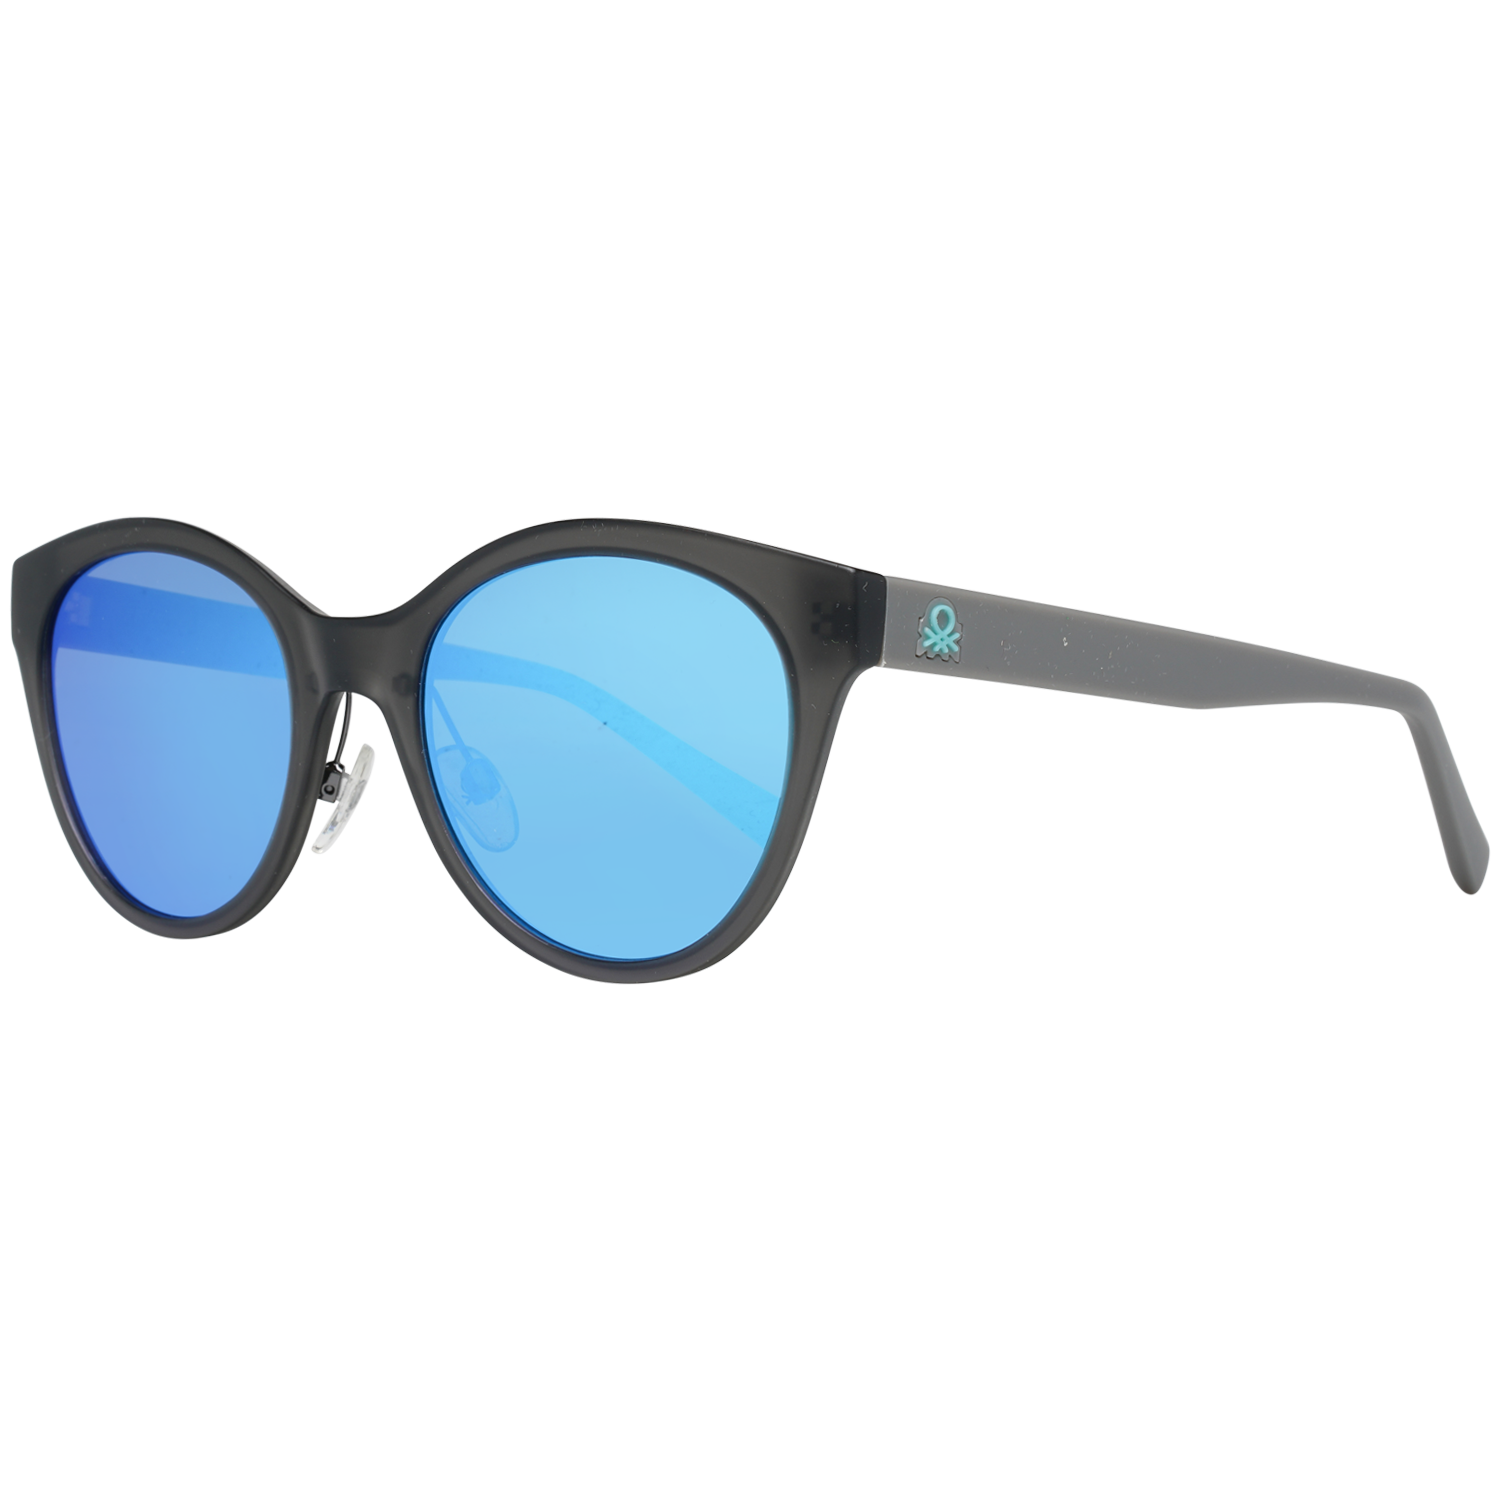 Benetton Sunglasses BE5008 910 53 Grey